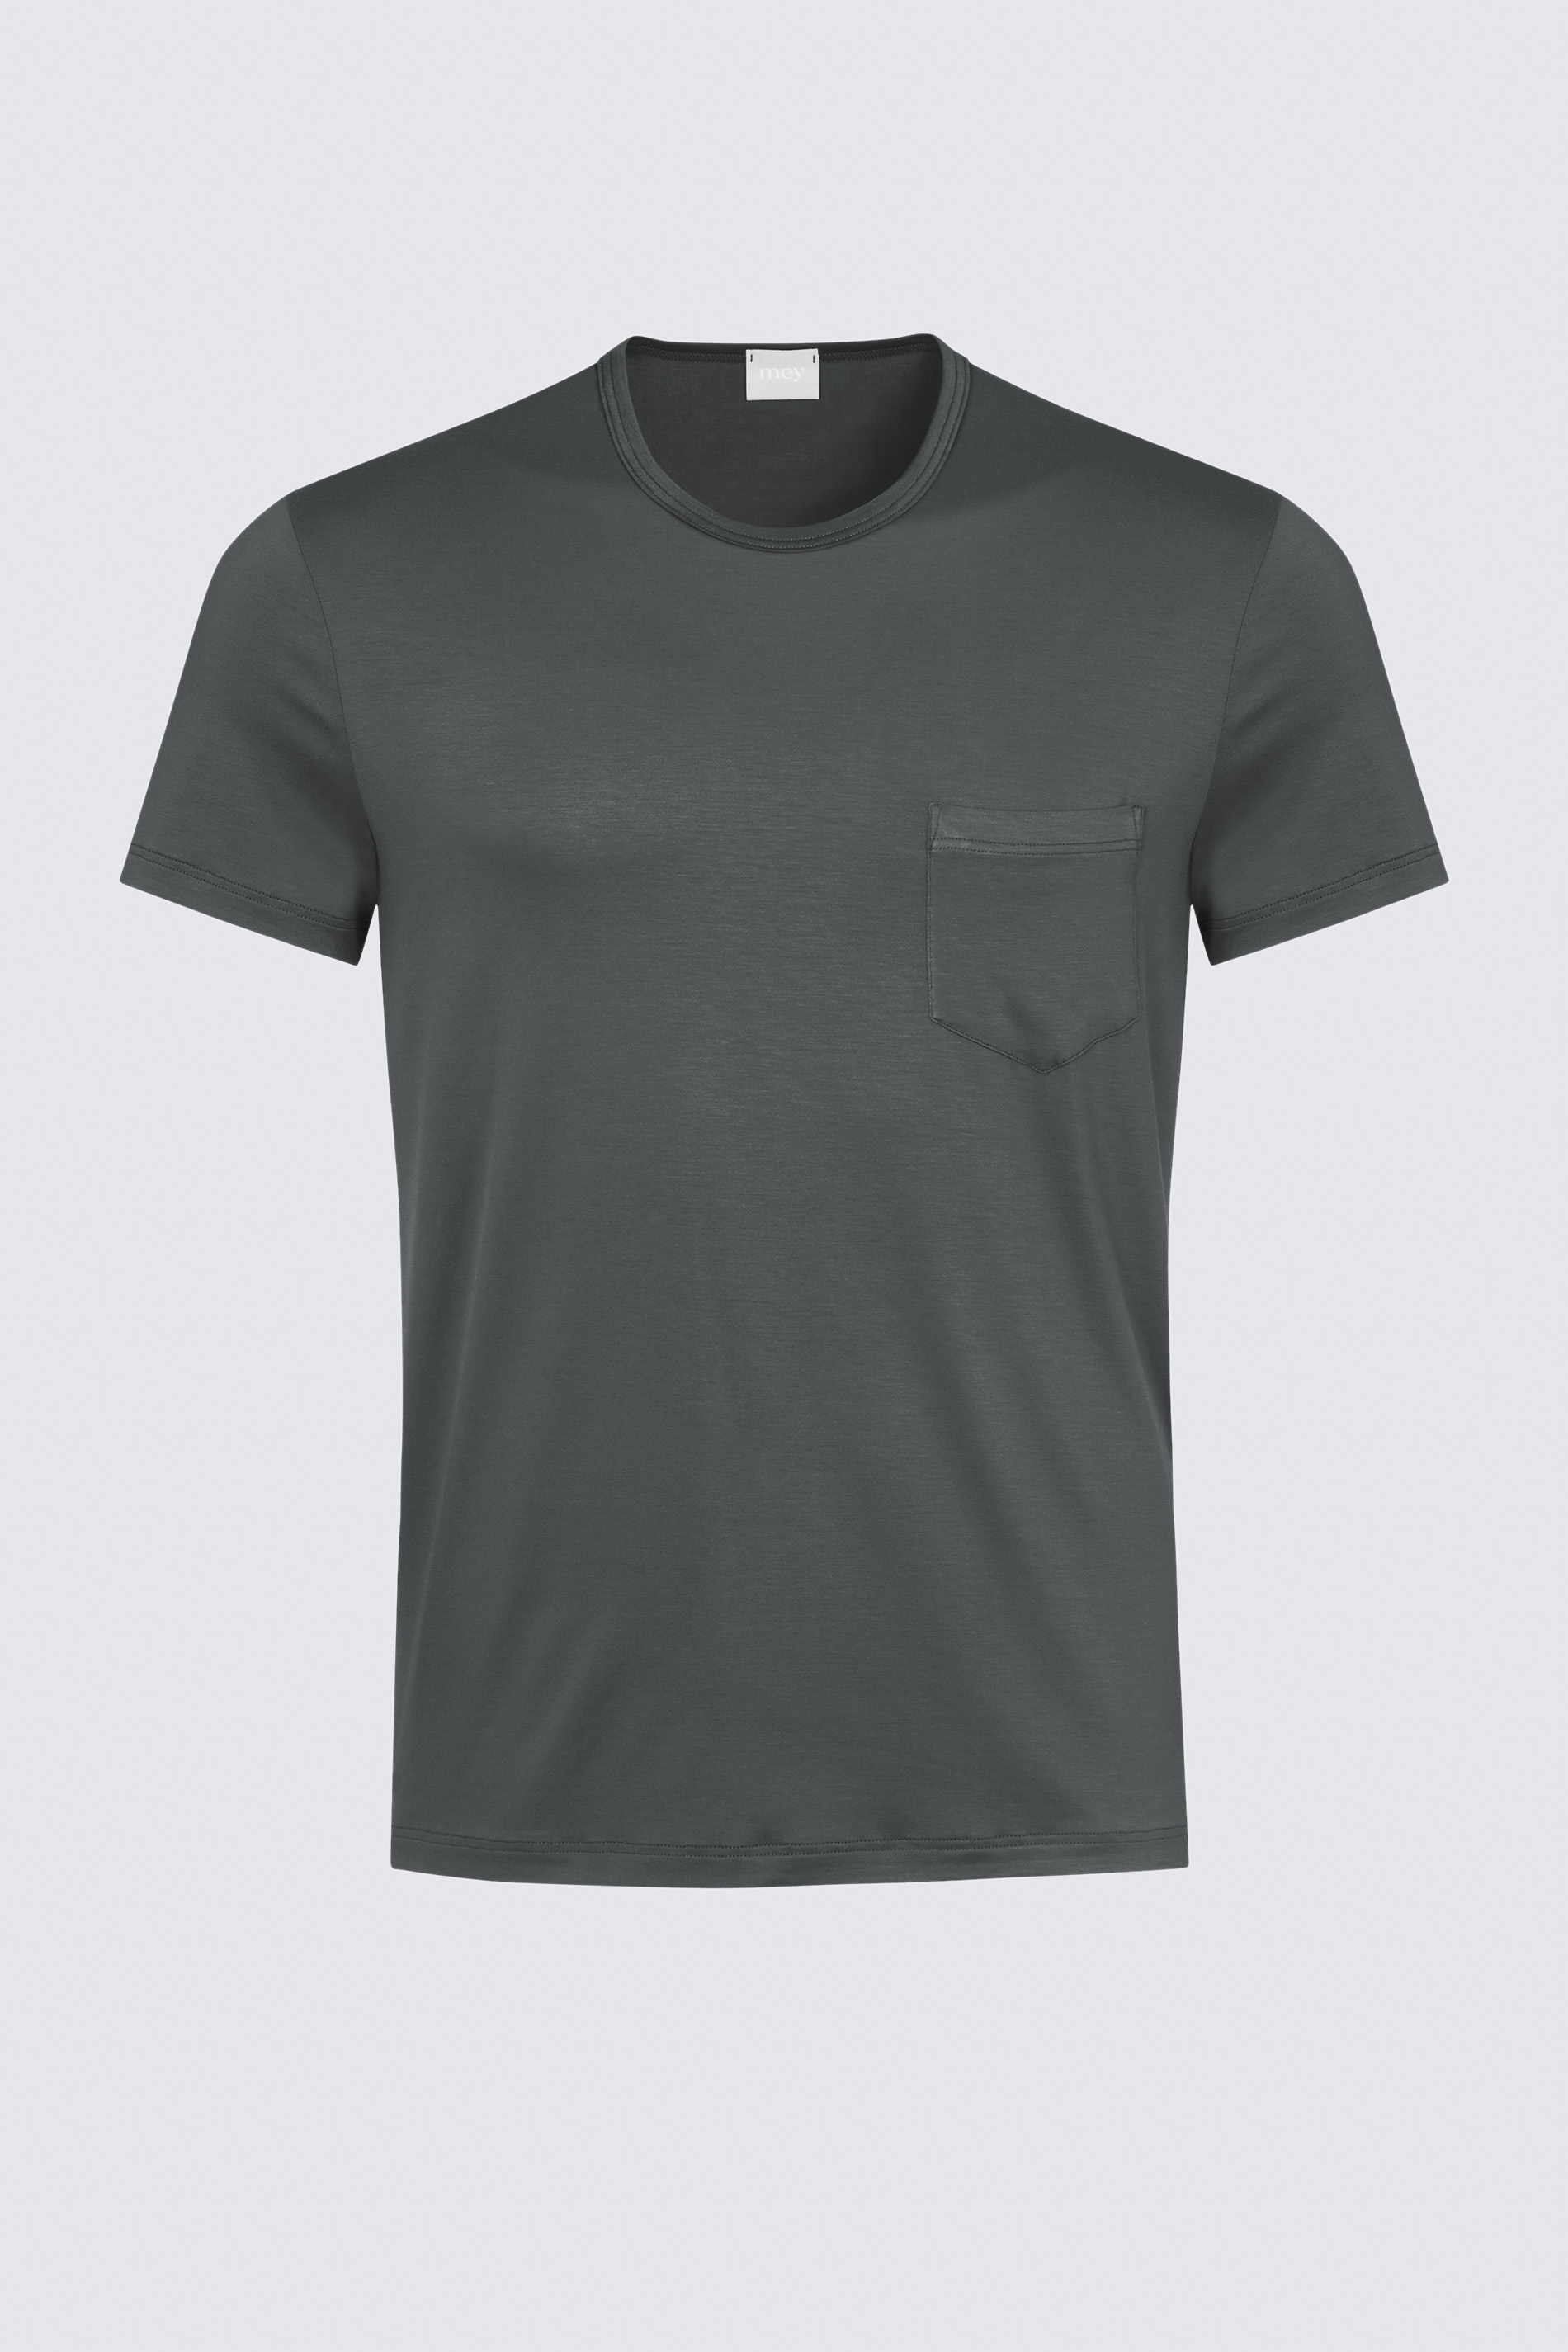 T-Shirt Stormy Grey Serie Jefferson Modal Freisteller | mey®